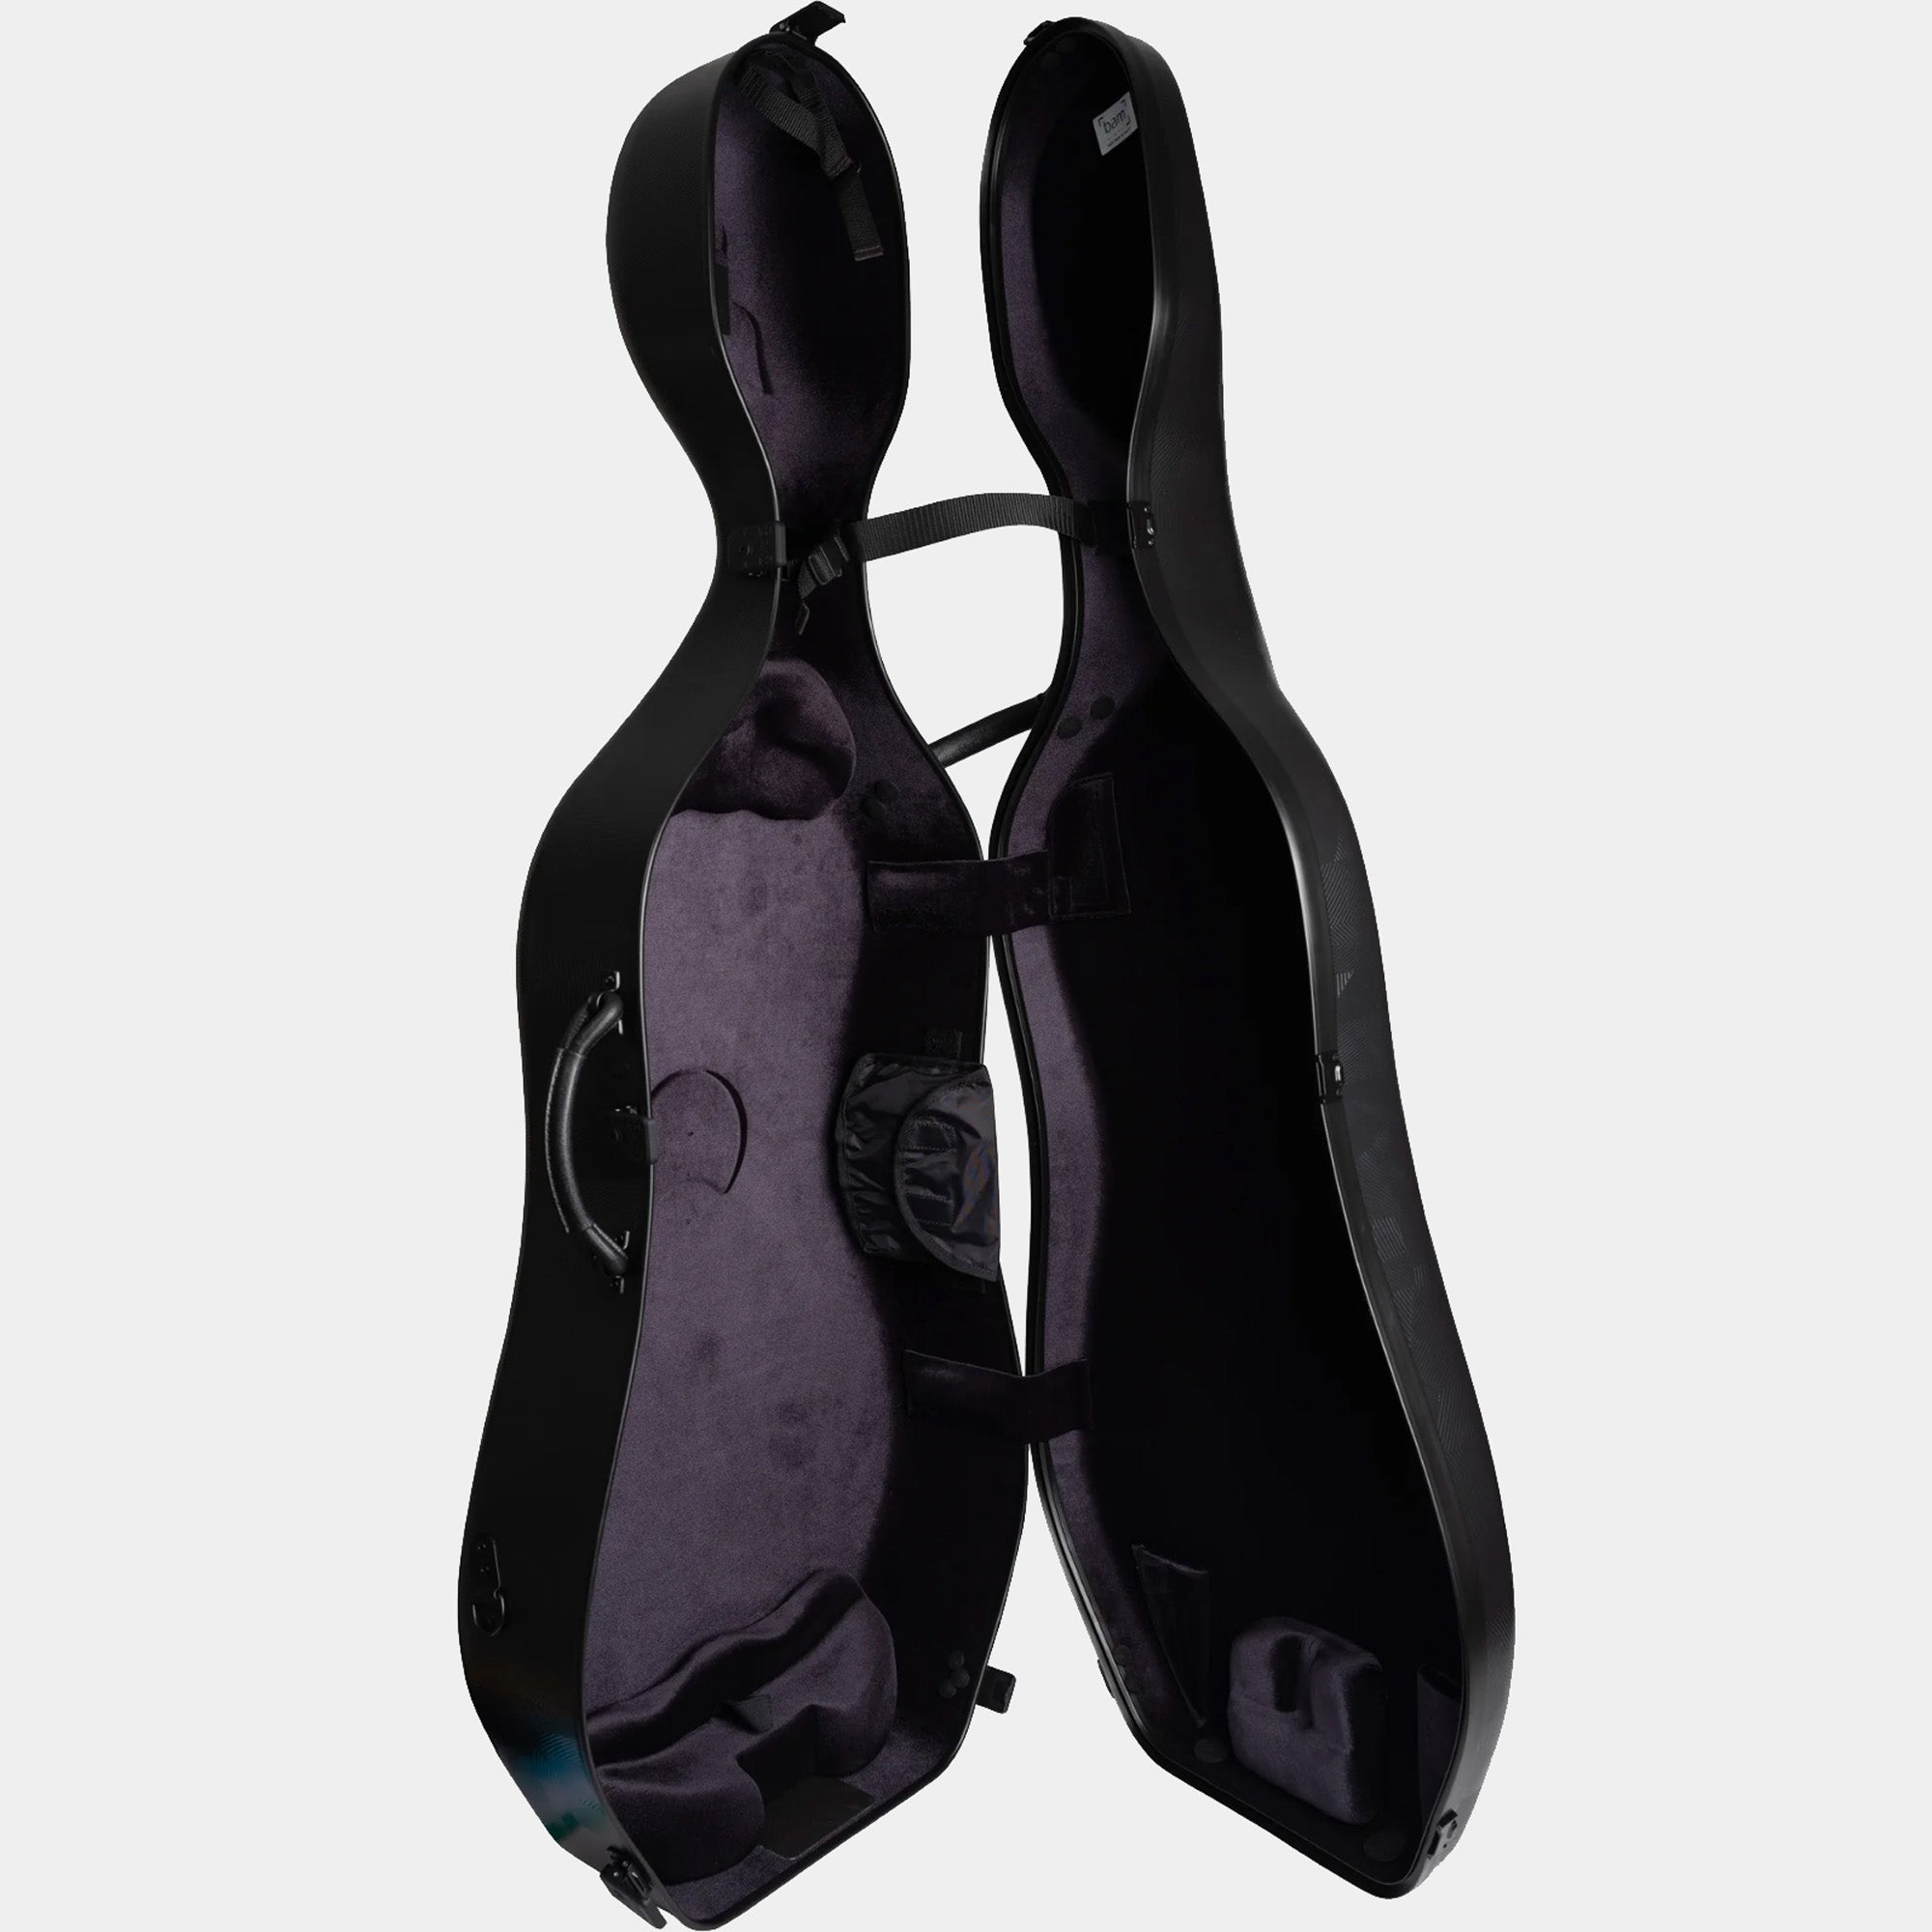 Shadow Hightech Cello Case With Wheels